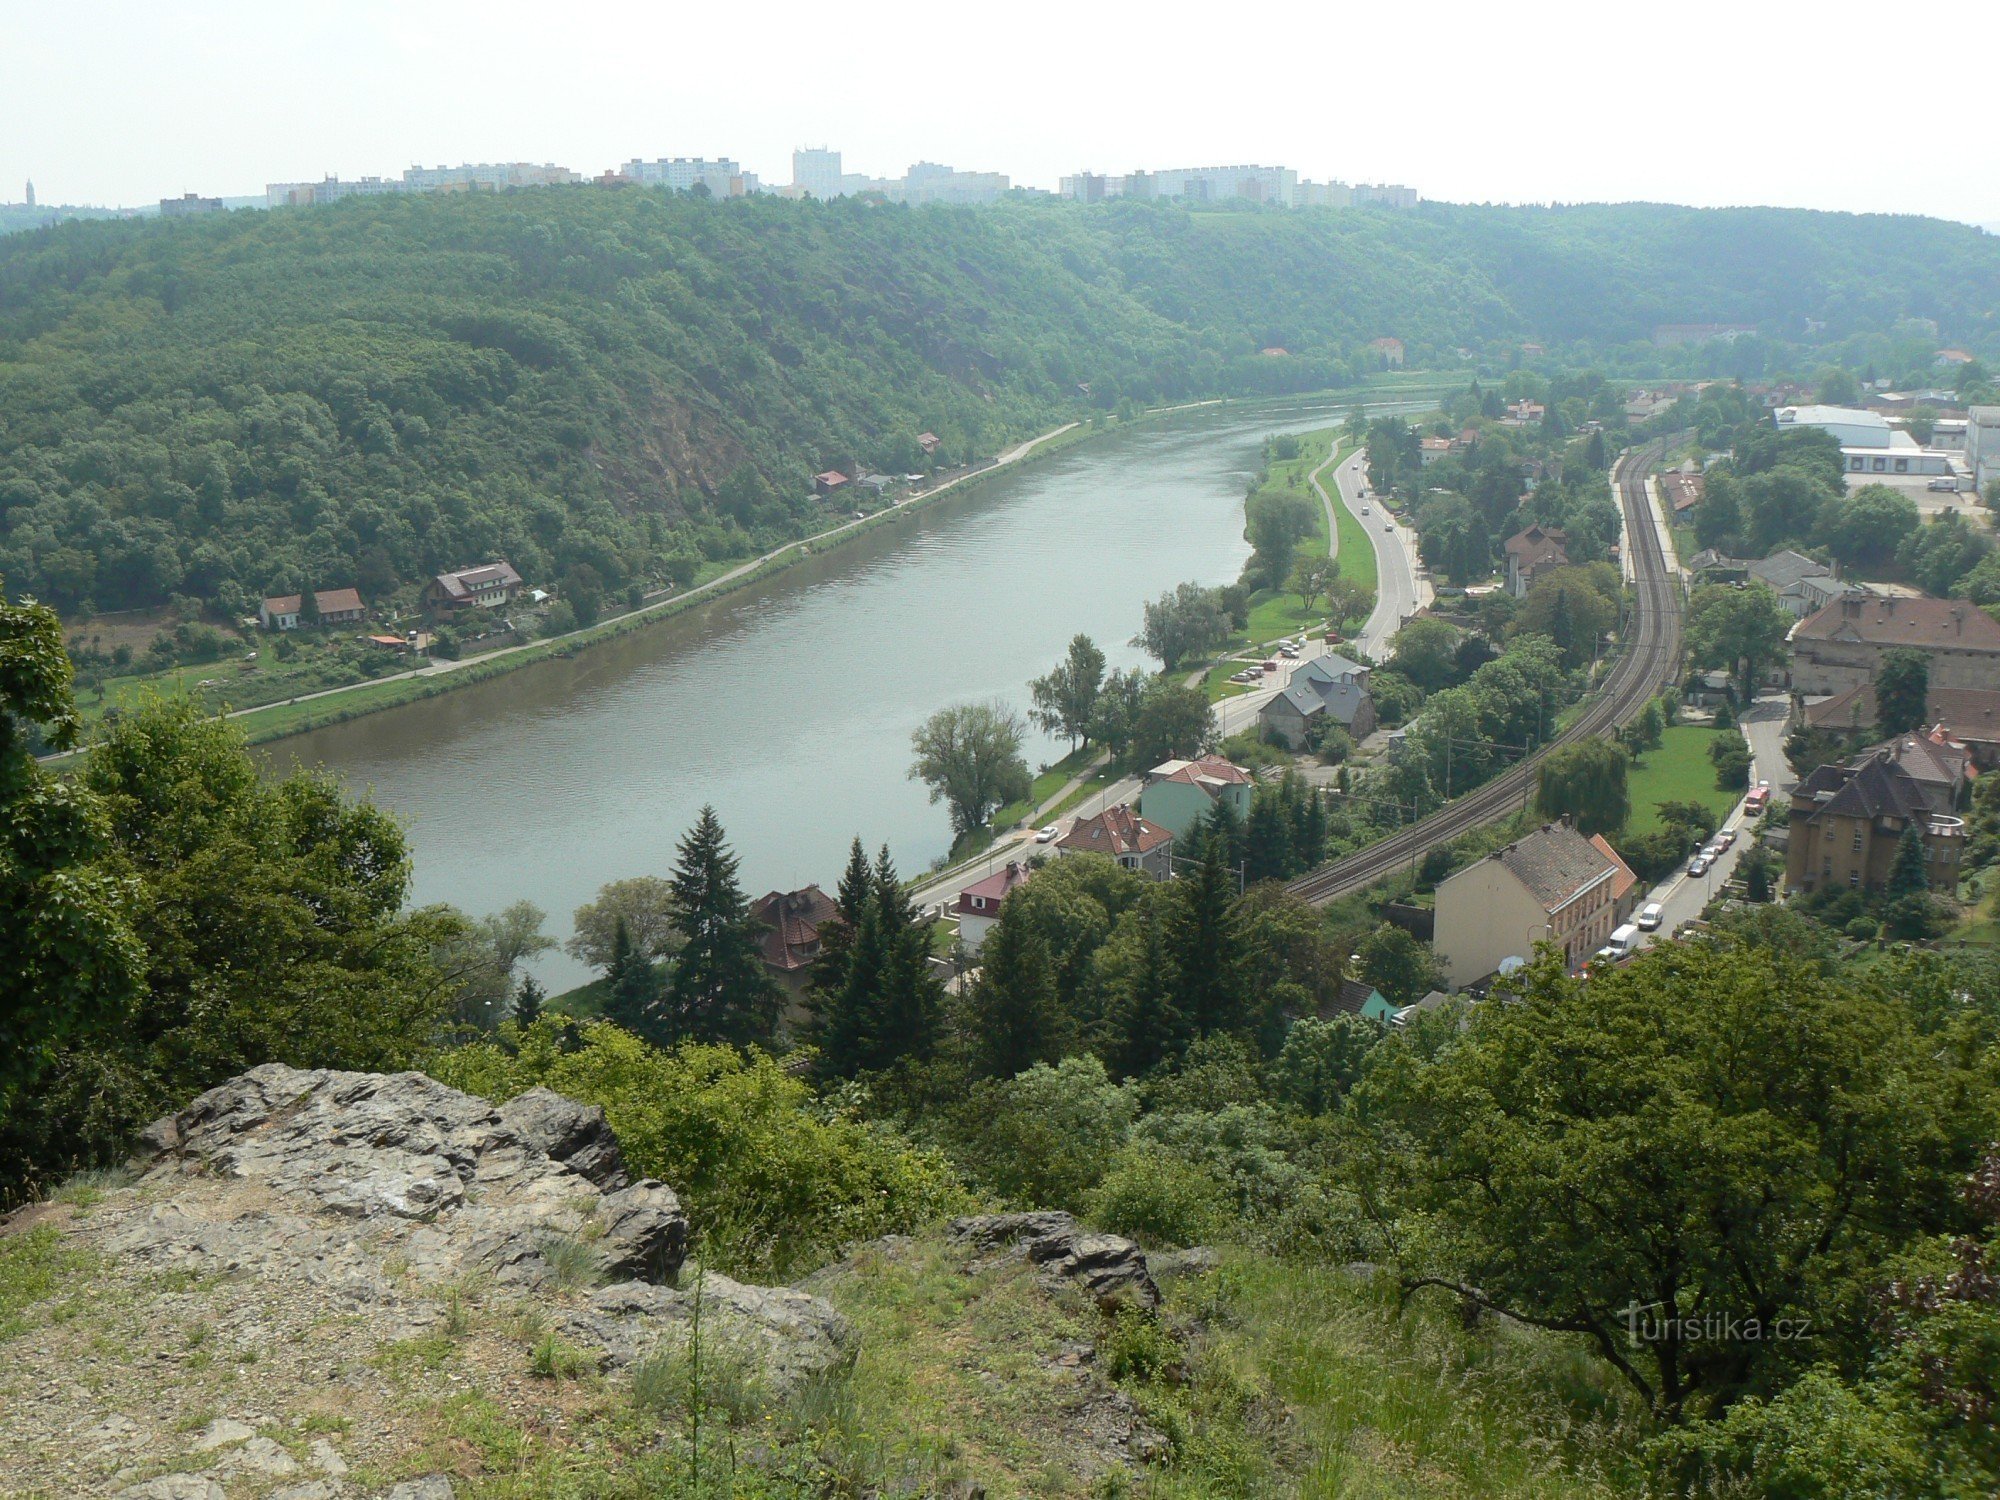 Vltava-dalen och Sedlec, Roztocká-gatan